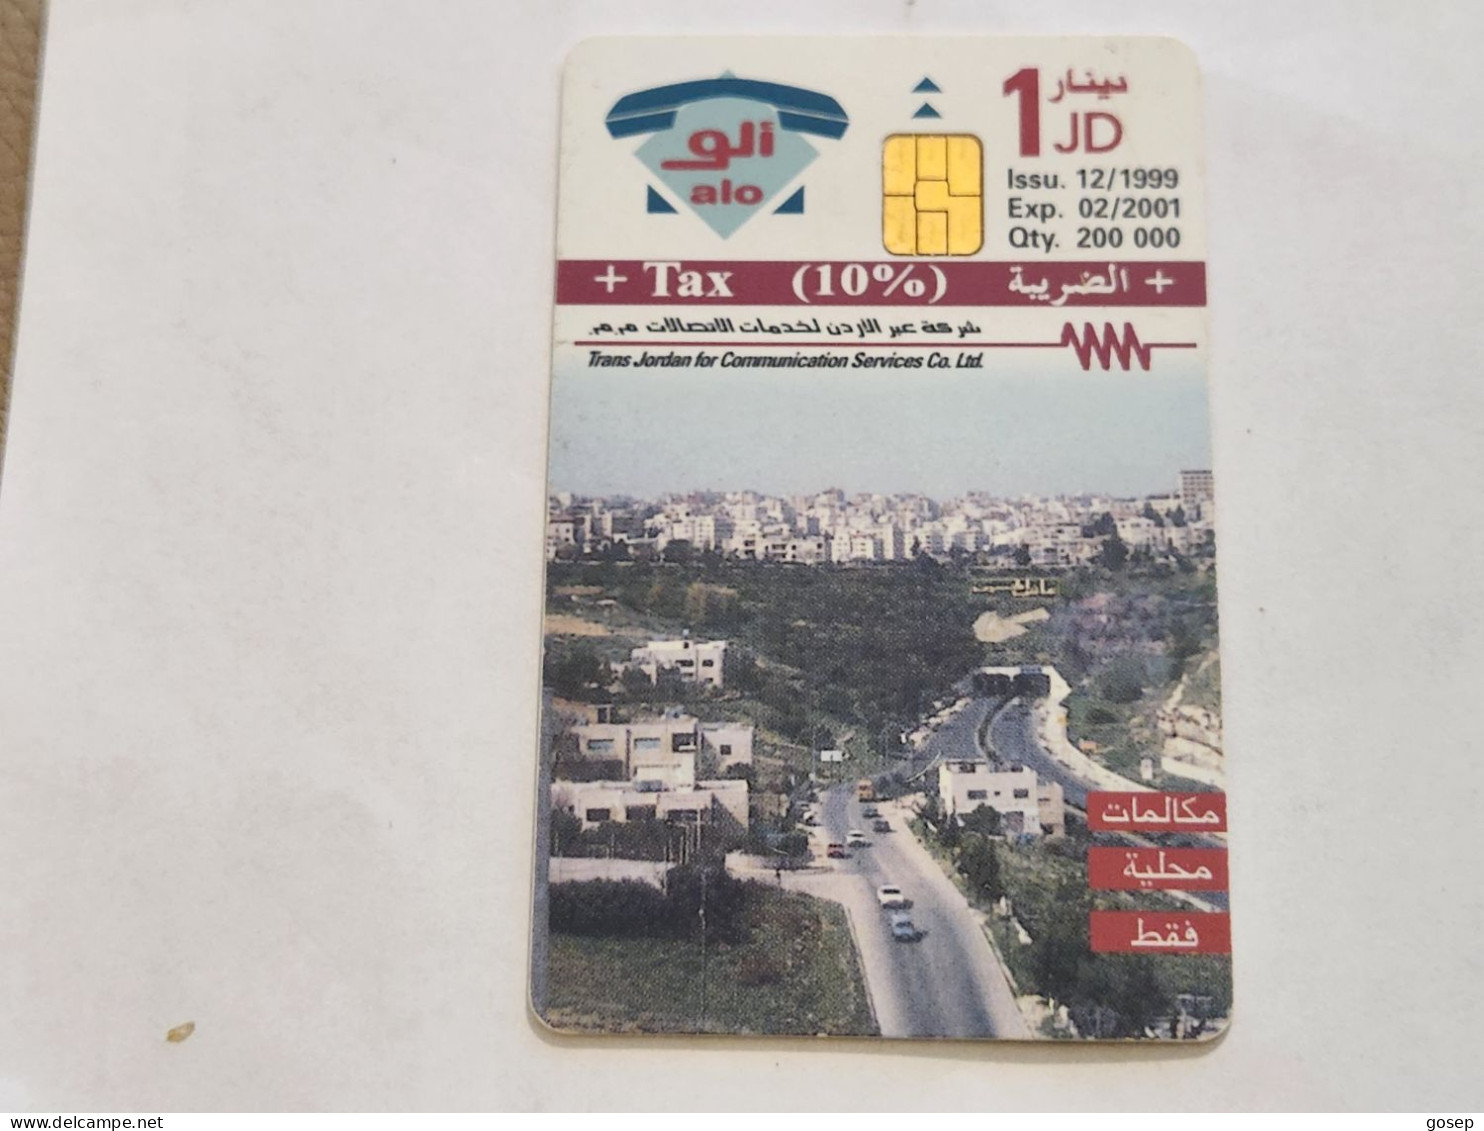 JORDAN-(JO-ALO-0073)-The Cave-Amman-(194)-(1003-399317)-(1JD)-(02/2001)-used Card+1card Prepiad Free - Jordan